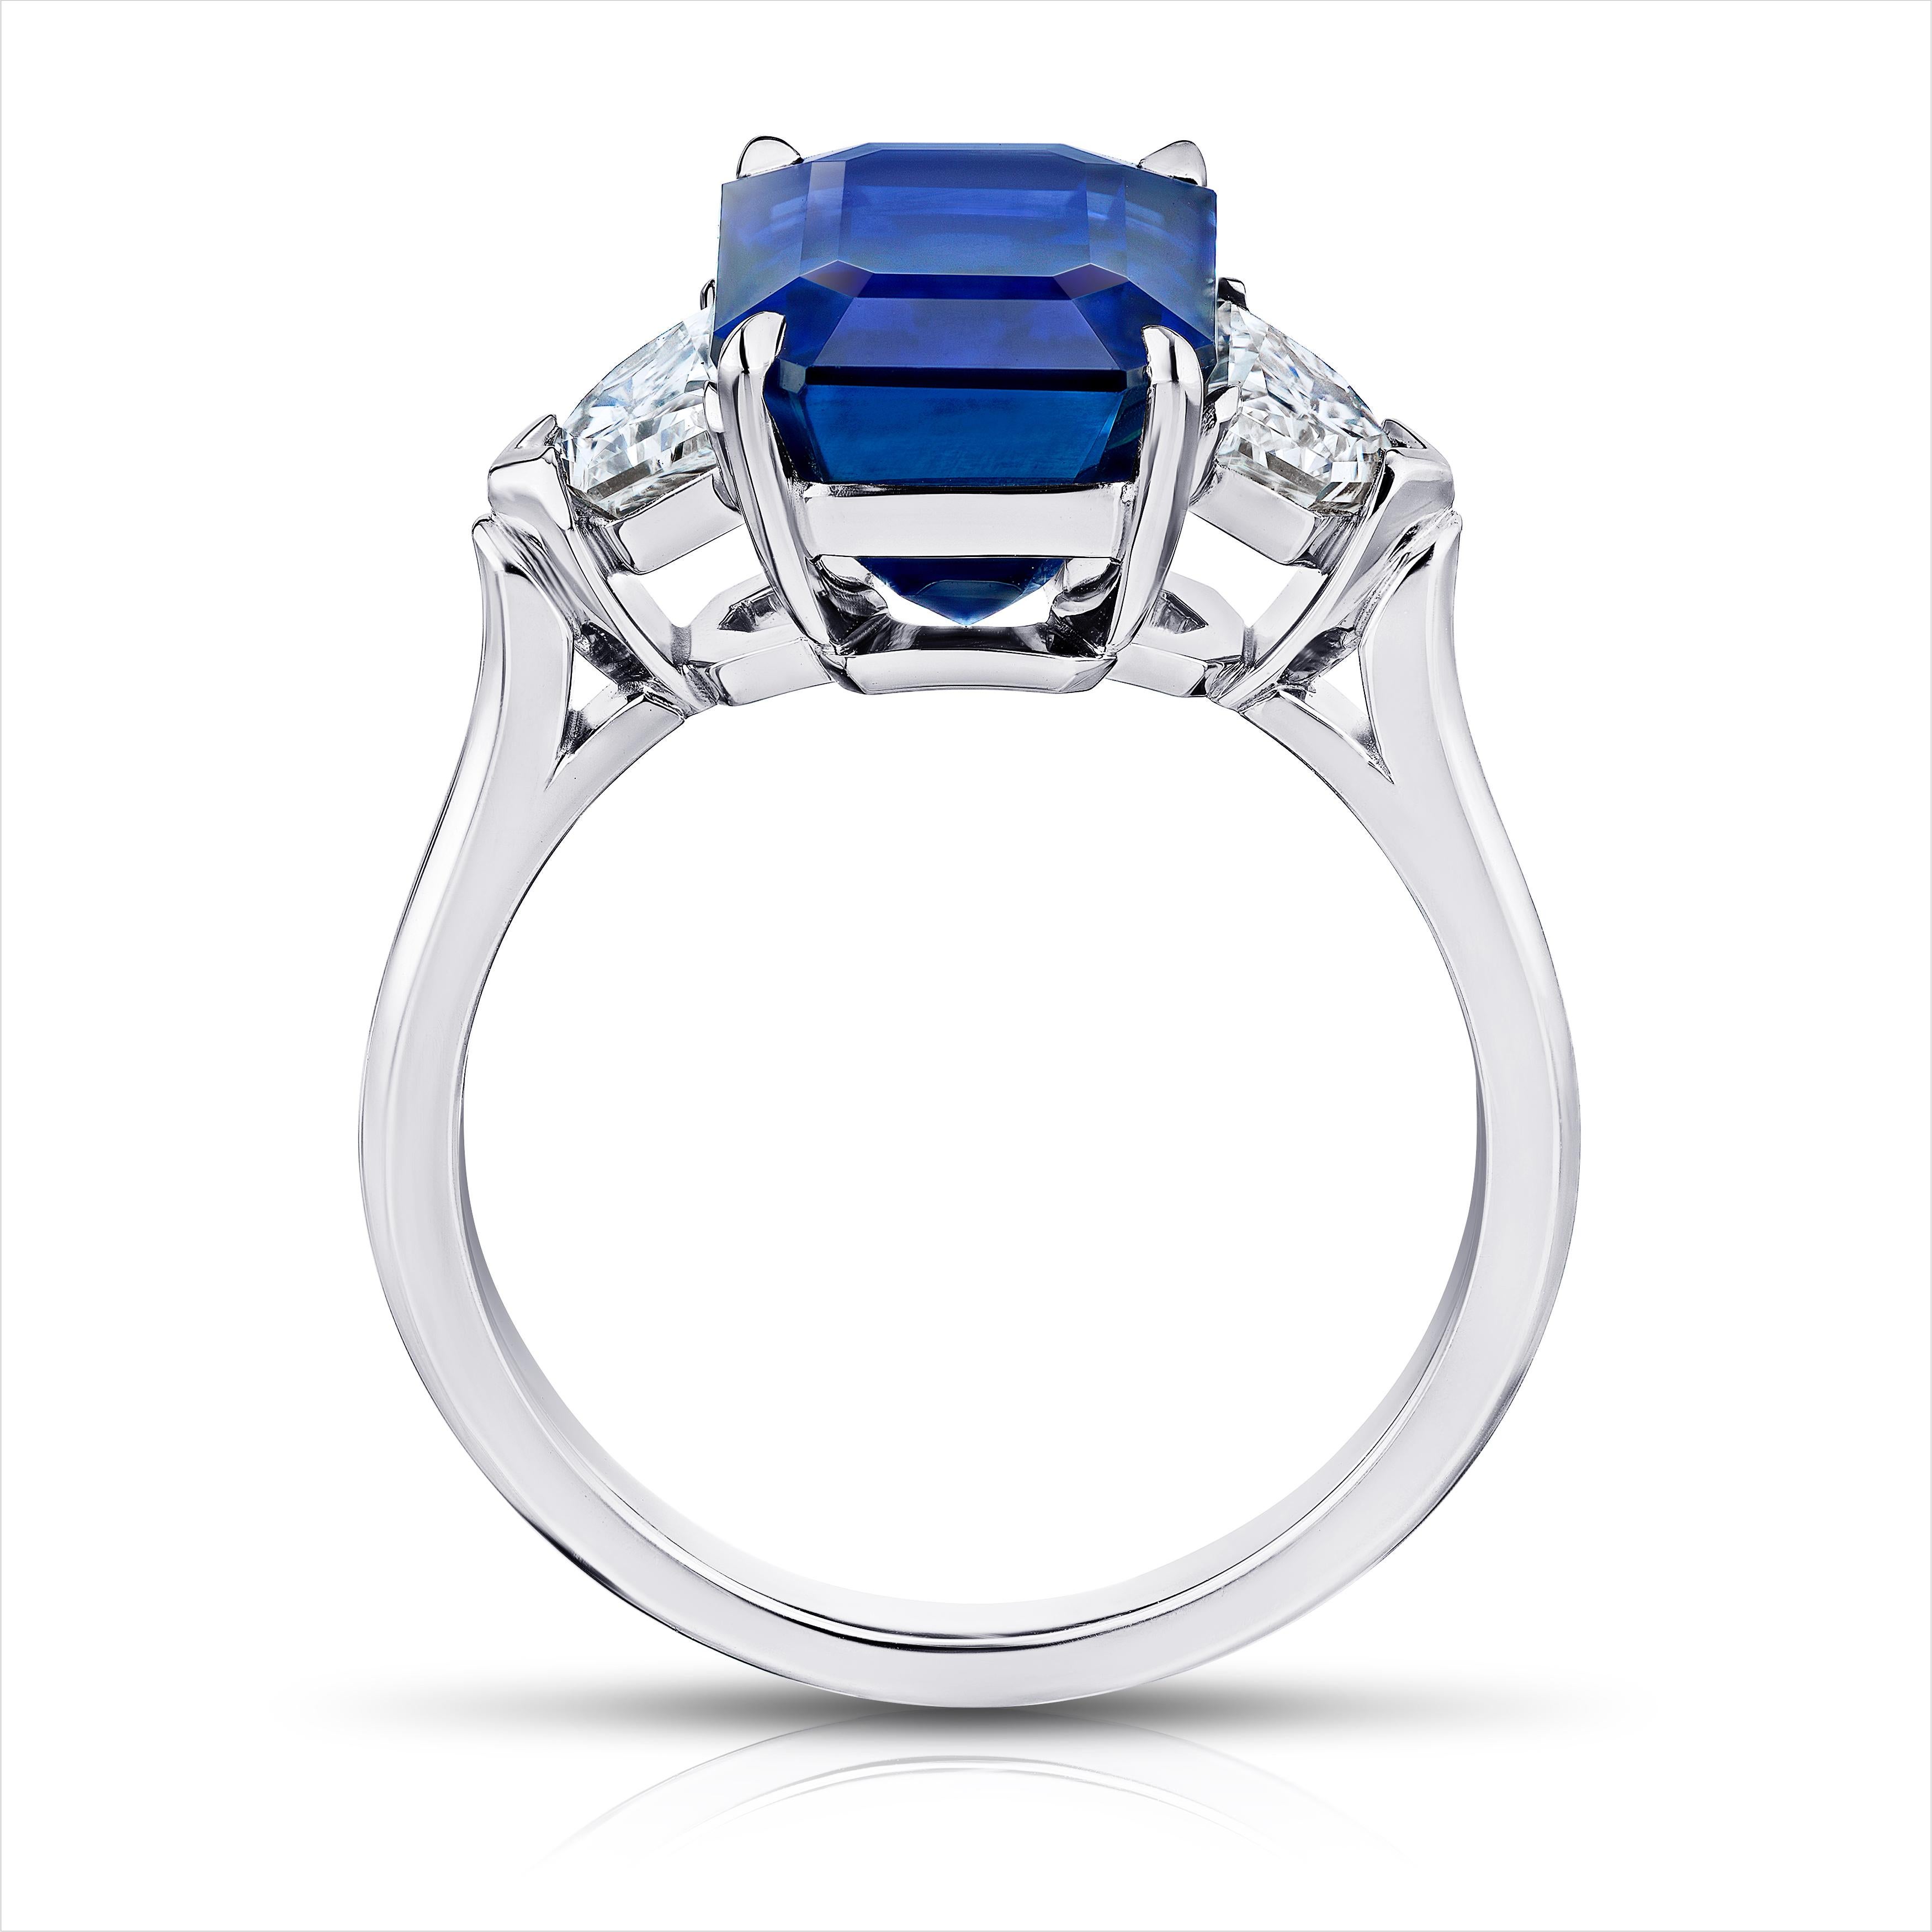 Contemporary 6.30 Carat Emerald Cut Blue Sapphire and Diamond Ring